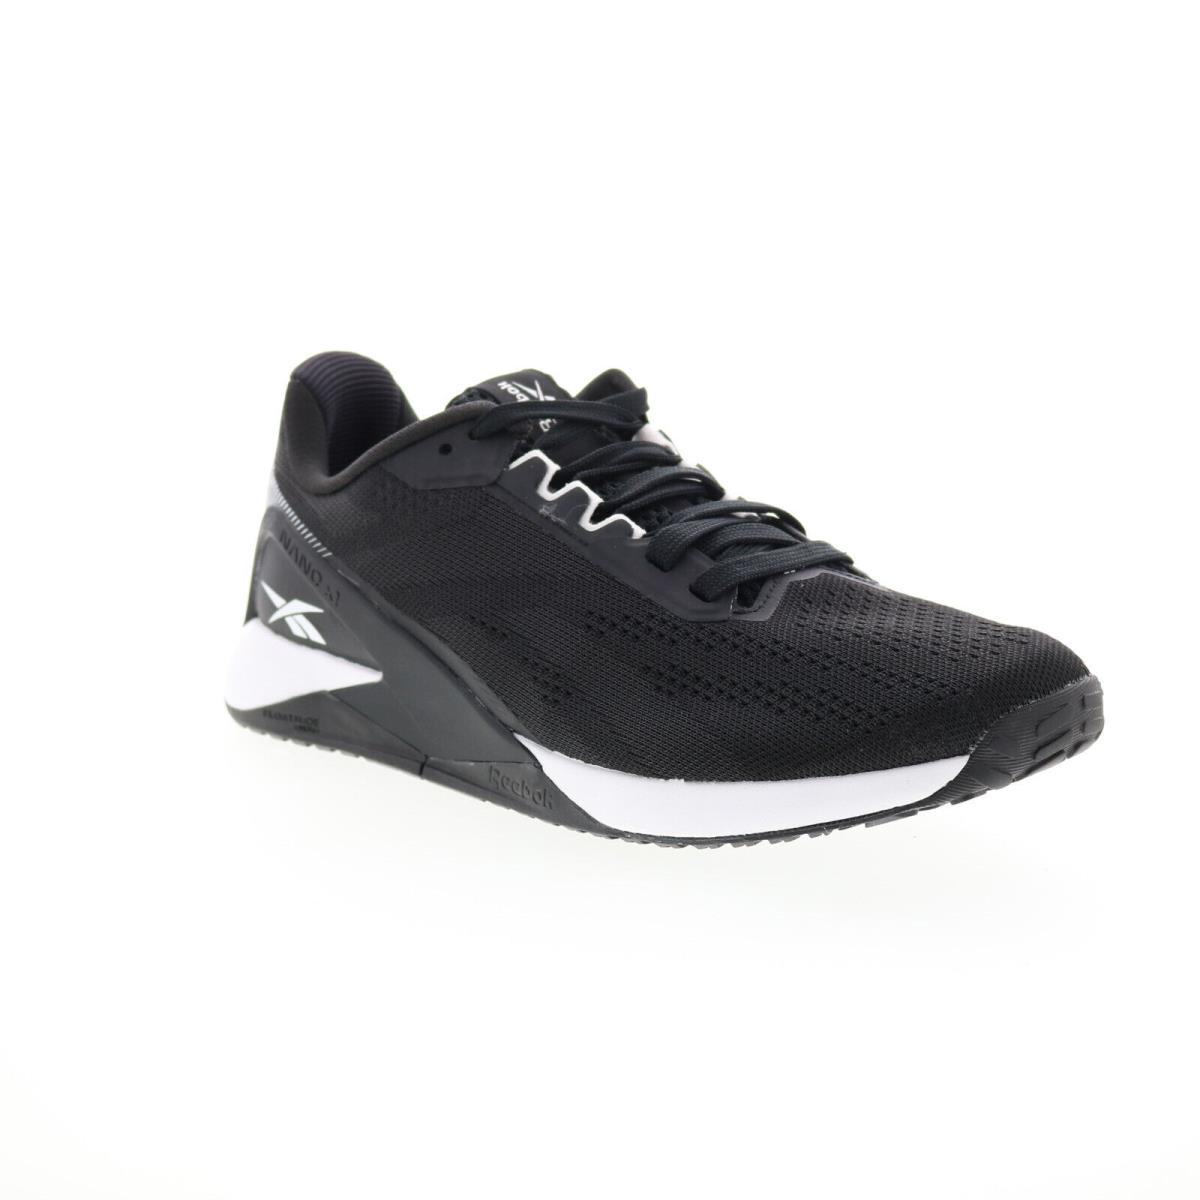 Reebok Nano X1 Womens Black Canvas Lace Up Athletic Cross Training Shoes - Black